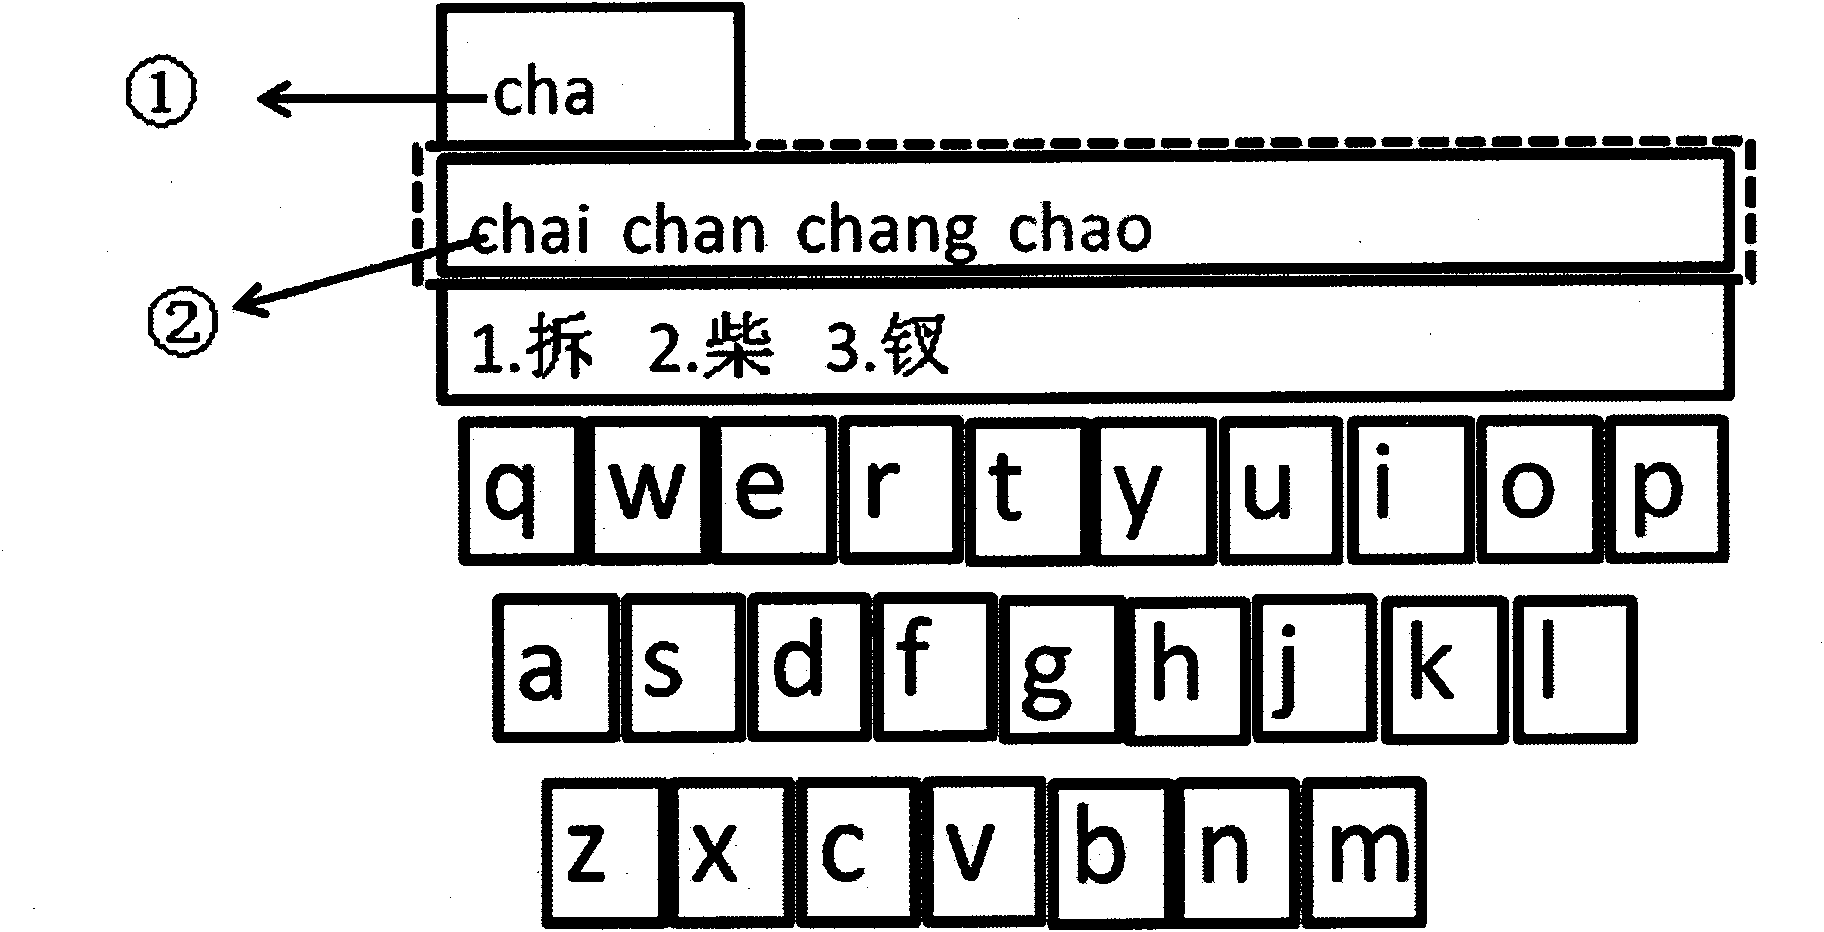 Touch screen-based intelligent pinyin association method